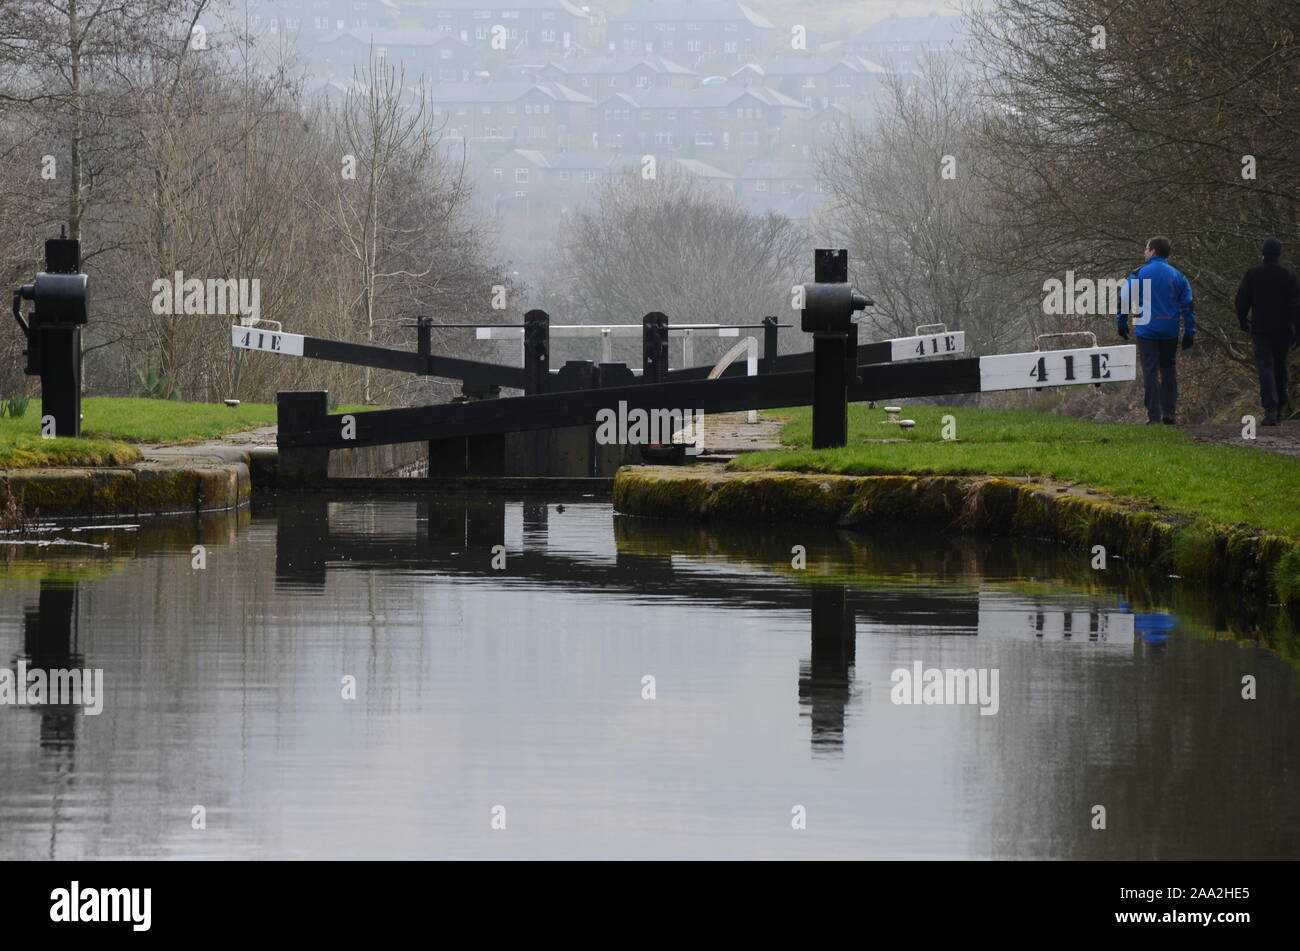 British canal network, victorian inland waterways system Stock Photo ...